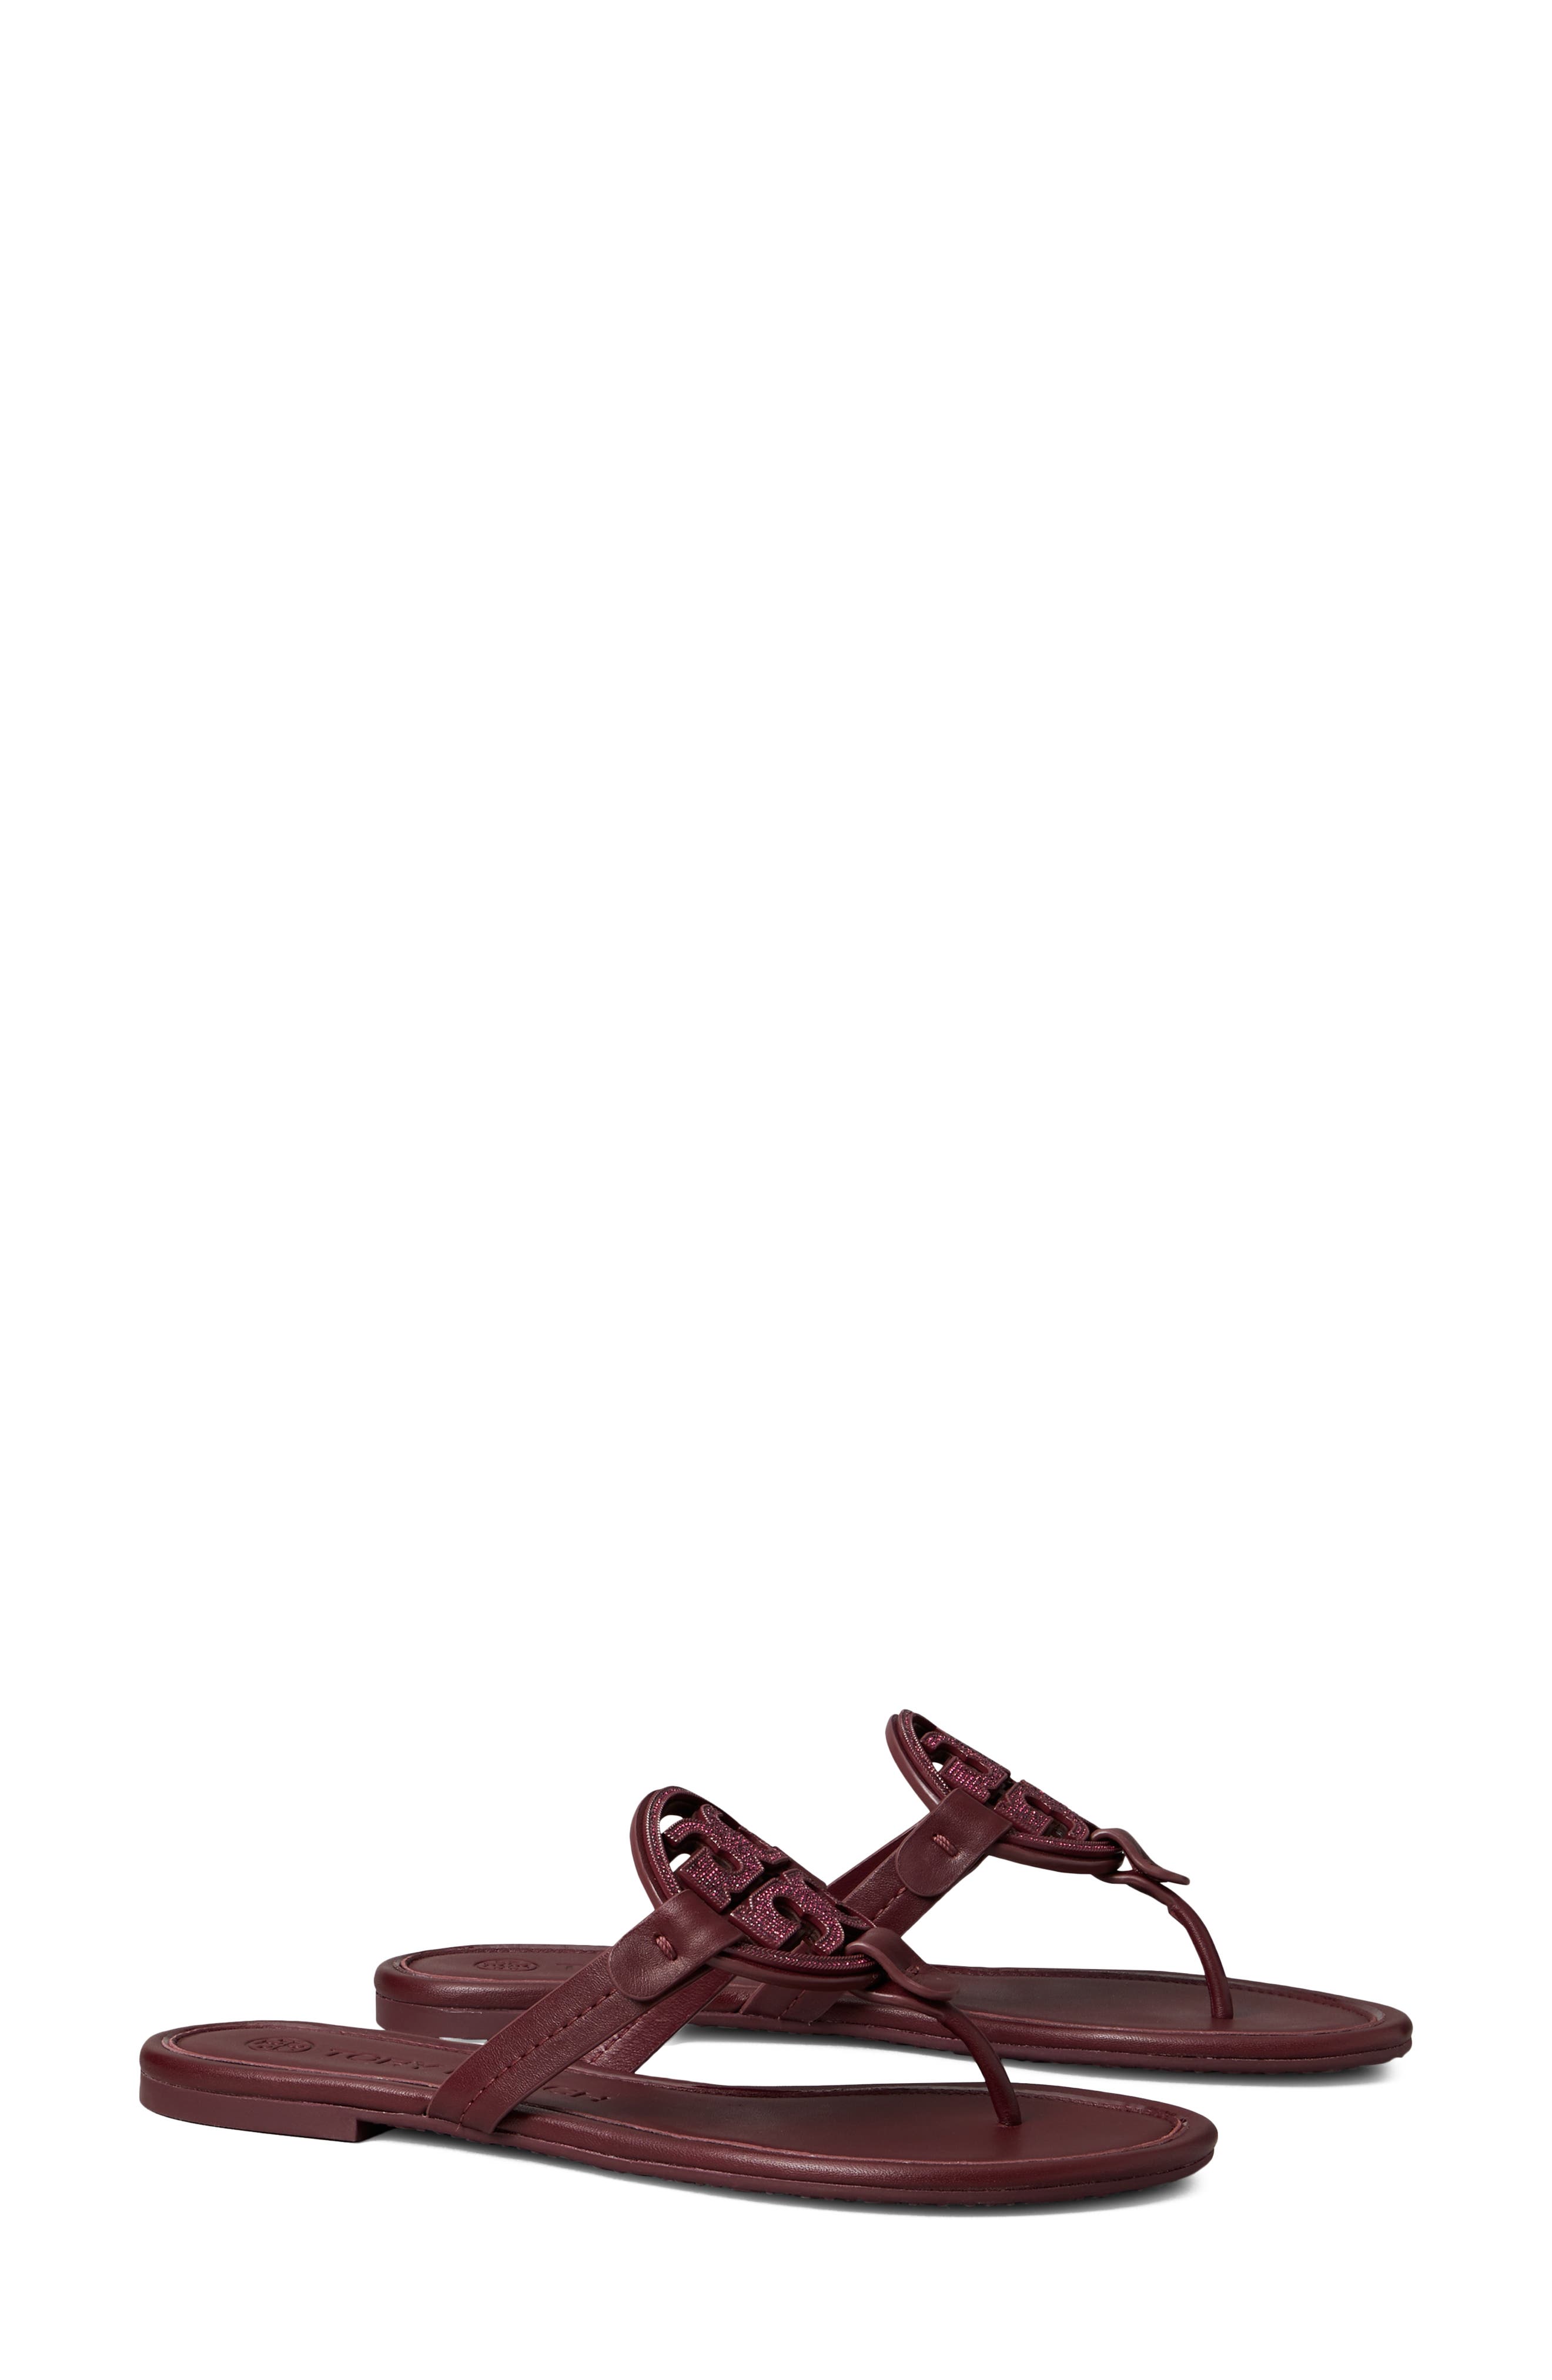 maroon sandals